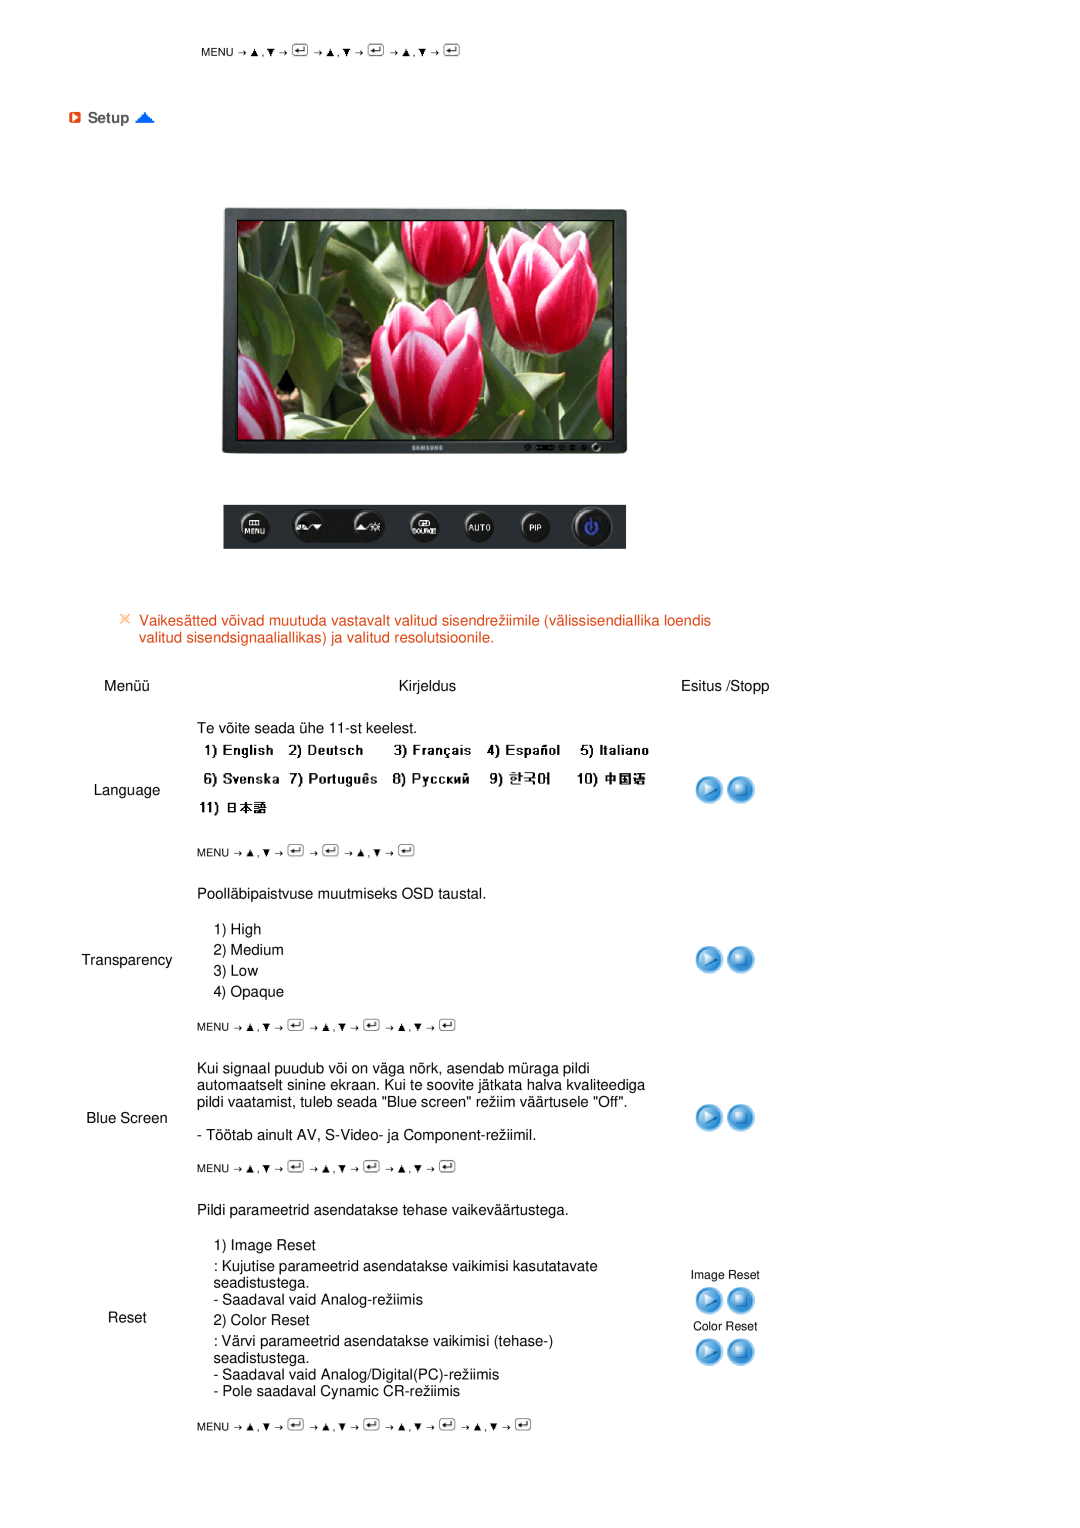 Samsung LS27HUBCB/EDC manual Setup, Image Reset Color Reset 